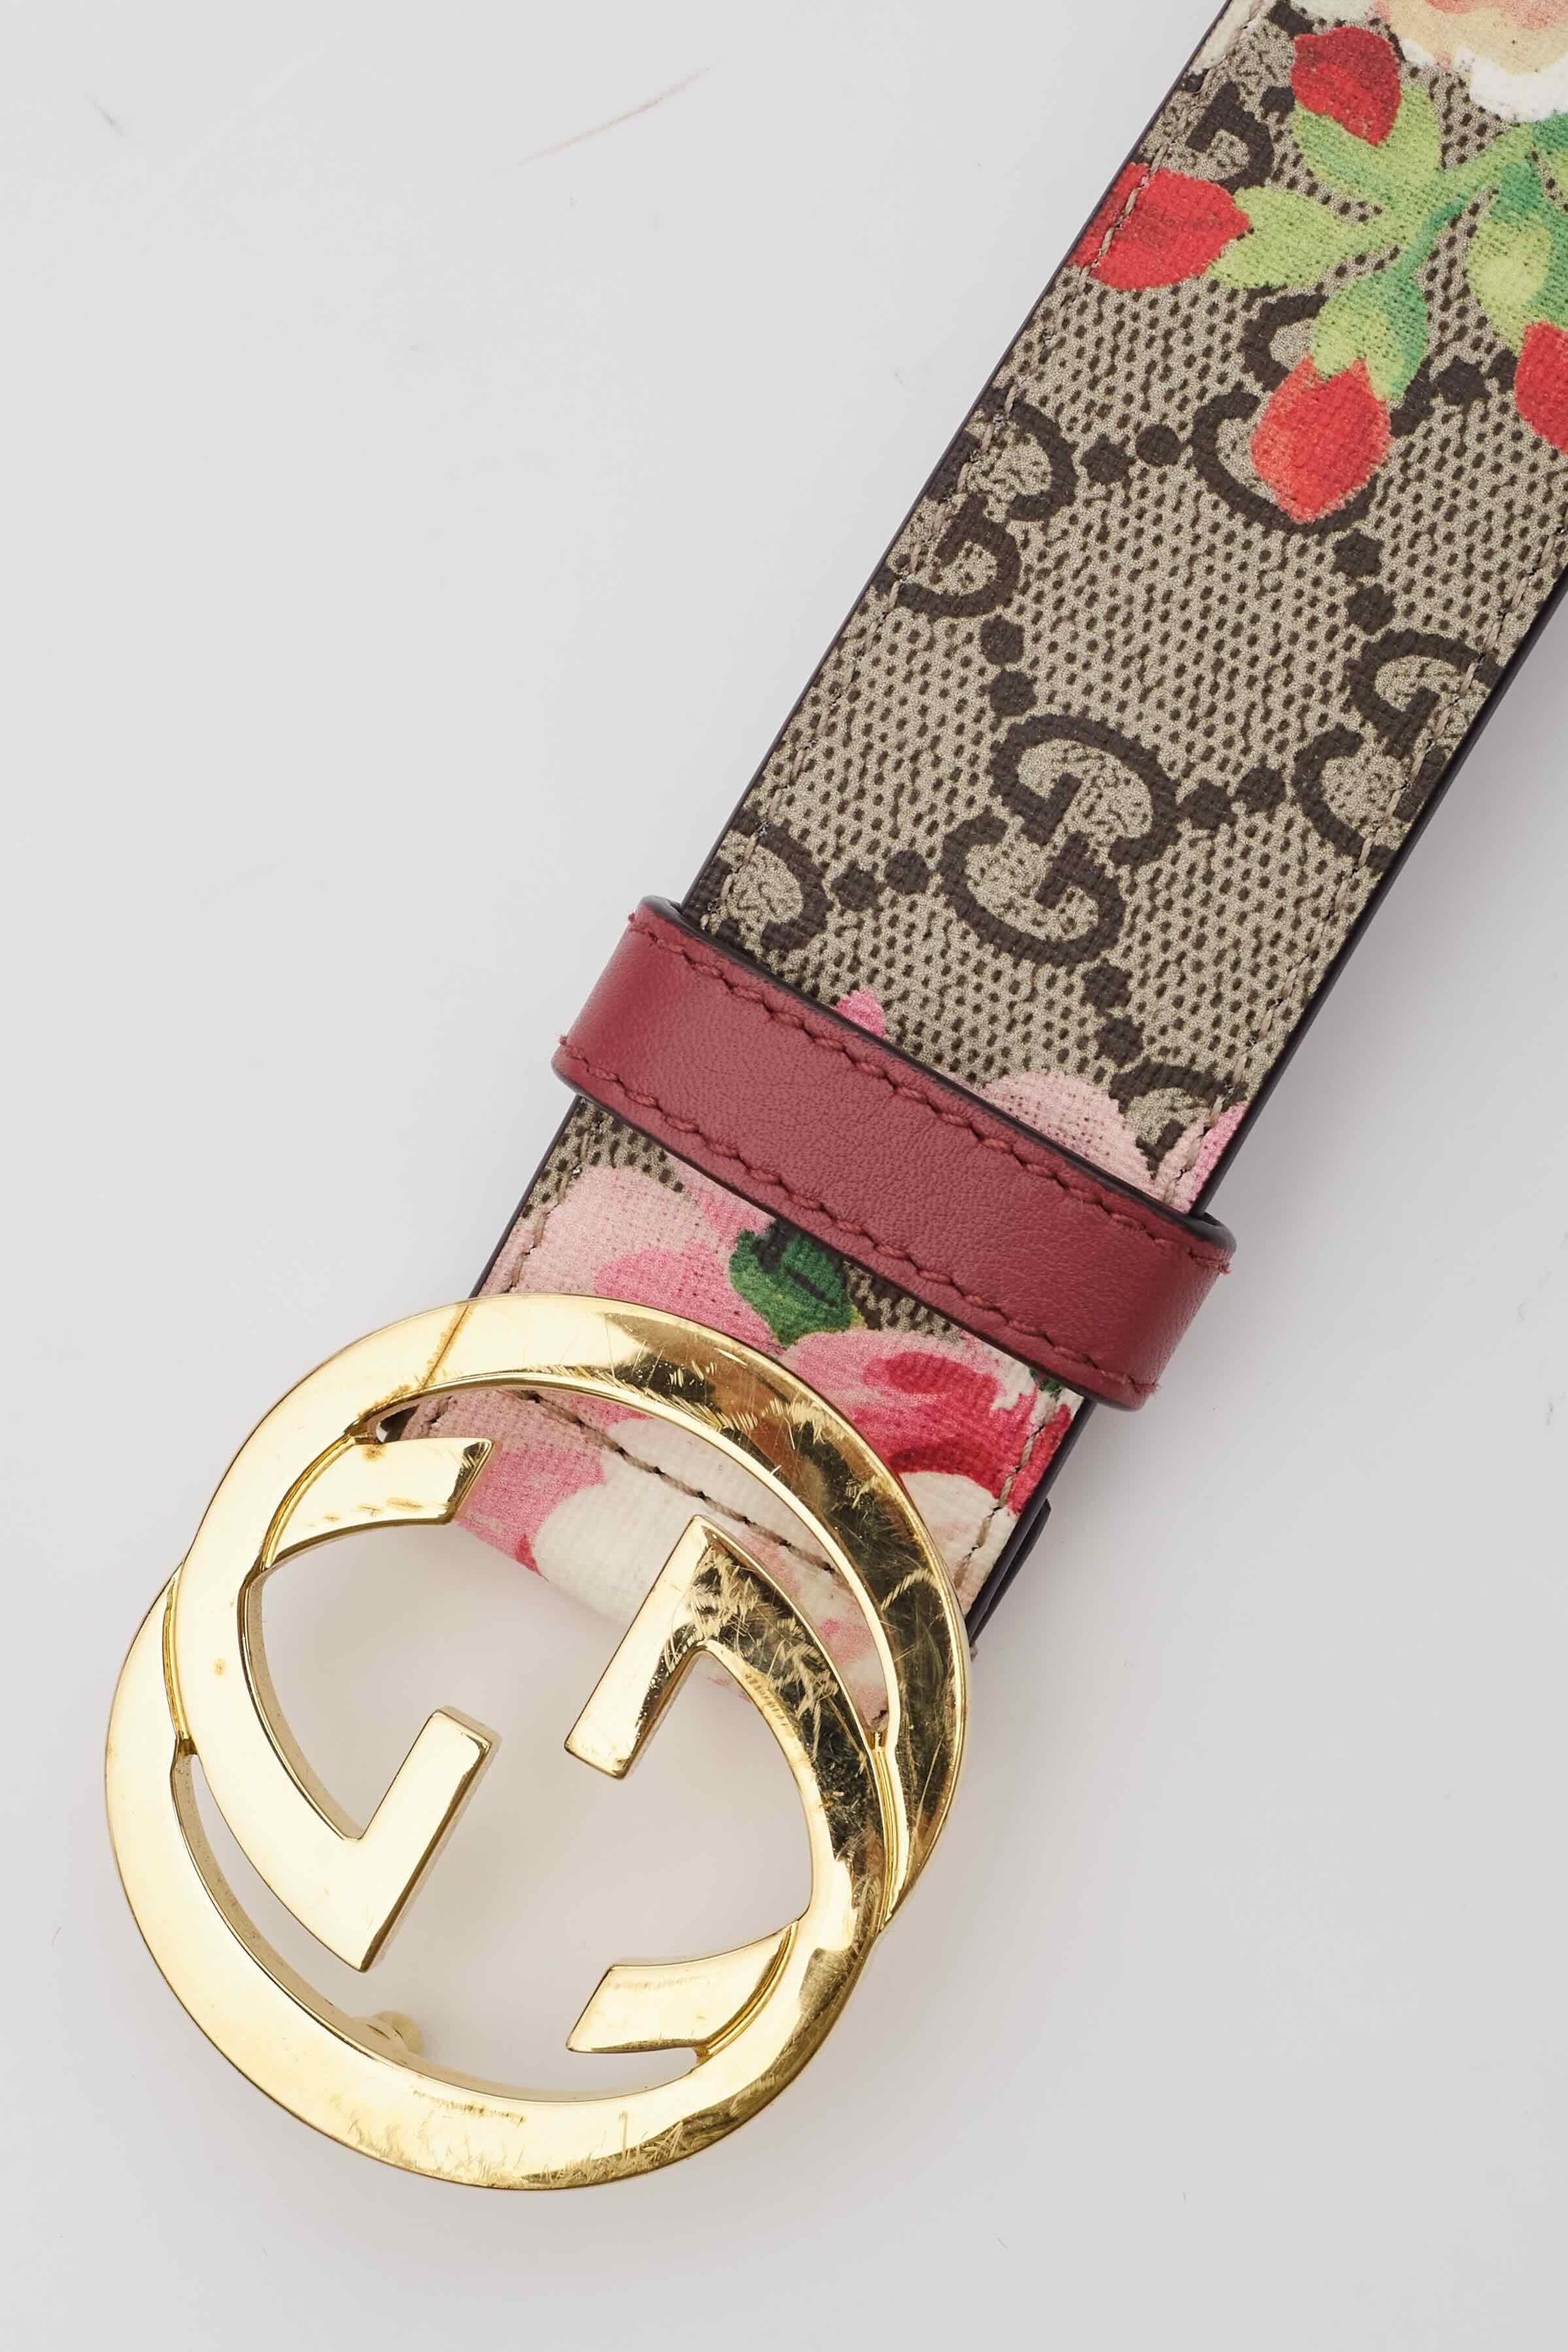 Gucci Supreme Monogram Floral Interlocking GG Belt (Size 75/30) In Good Condition For Sale In Montreal, Quebec